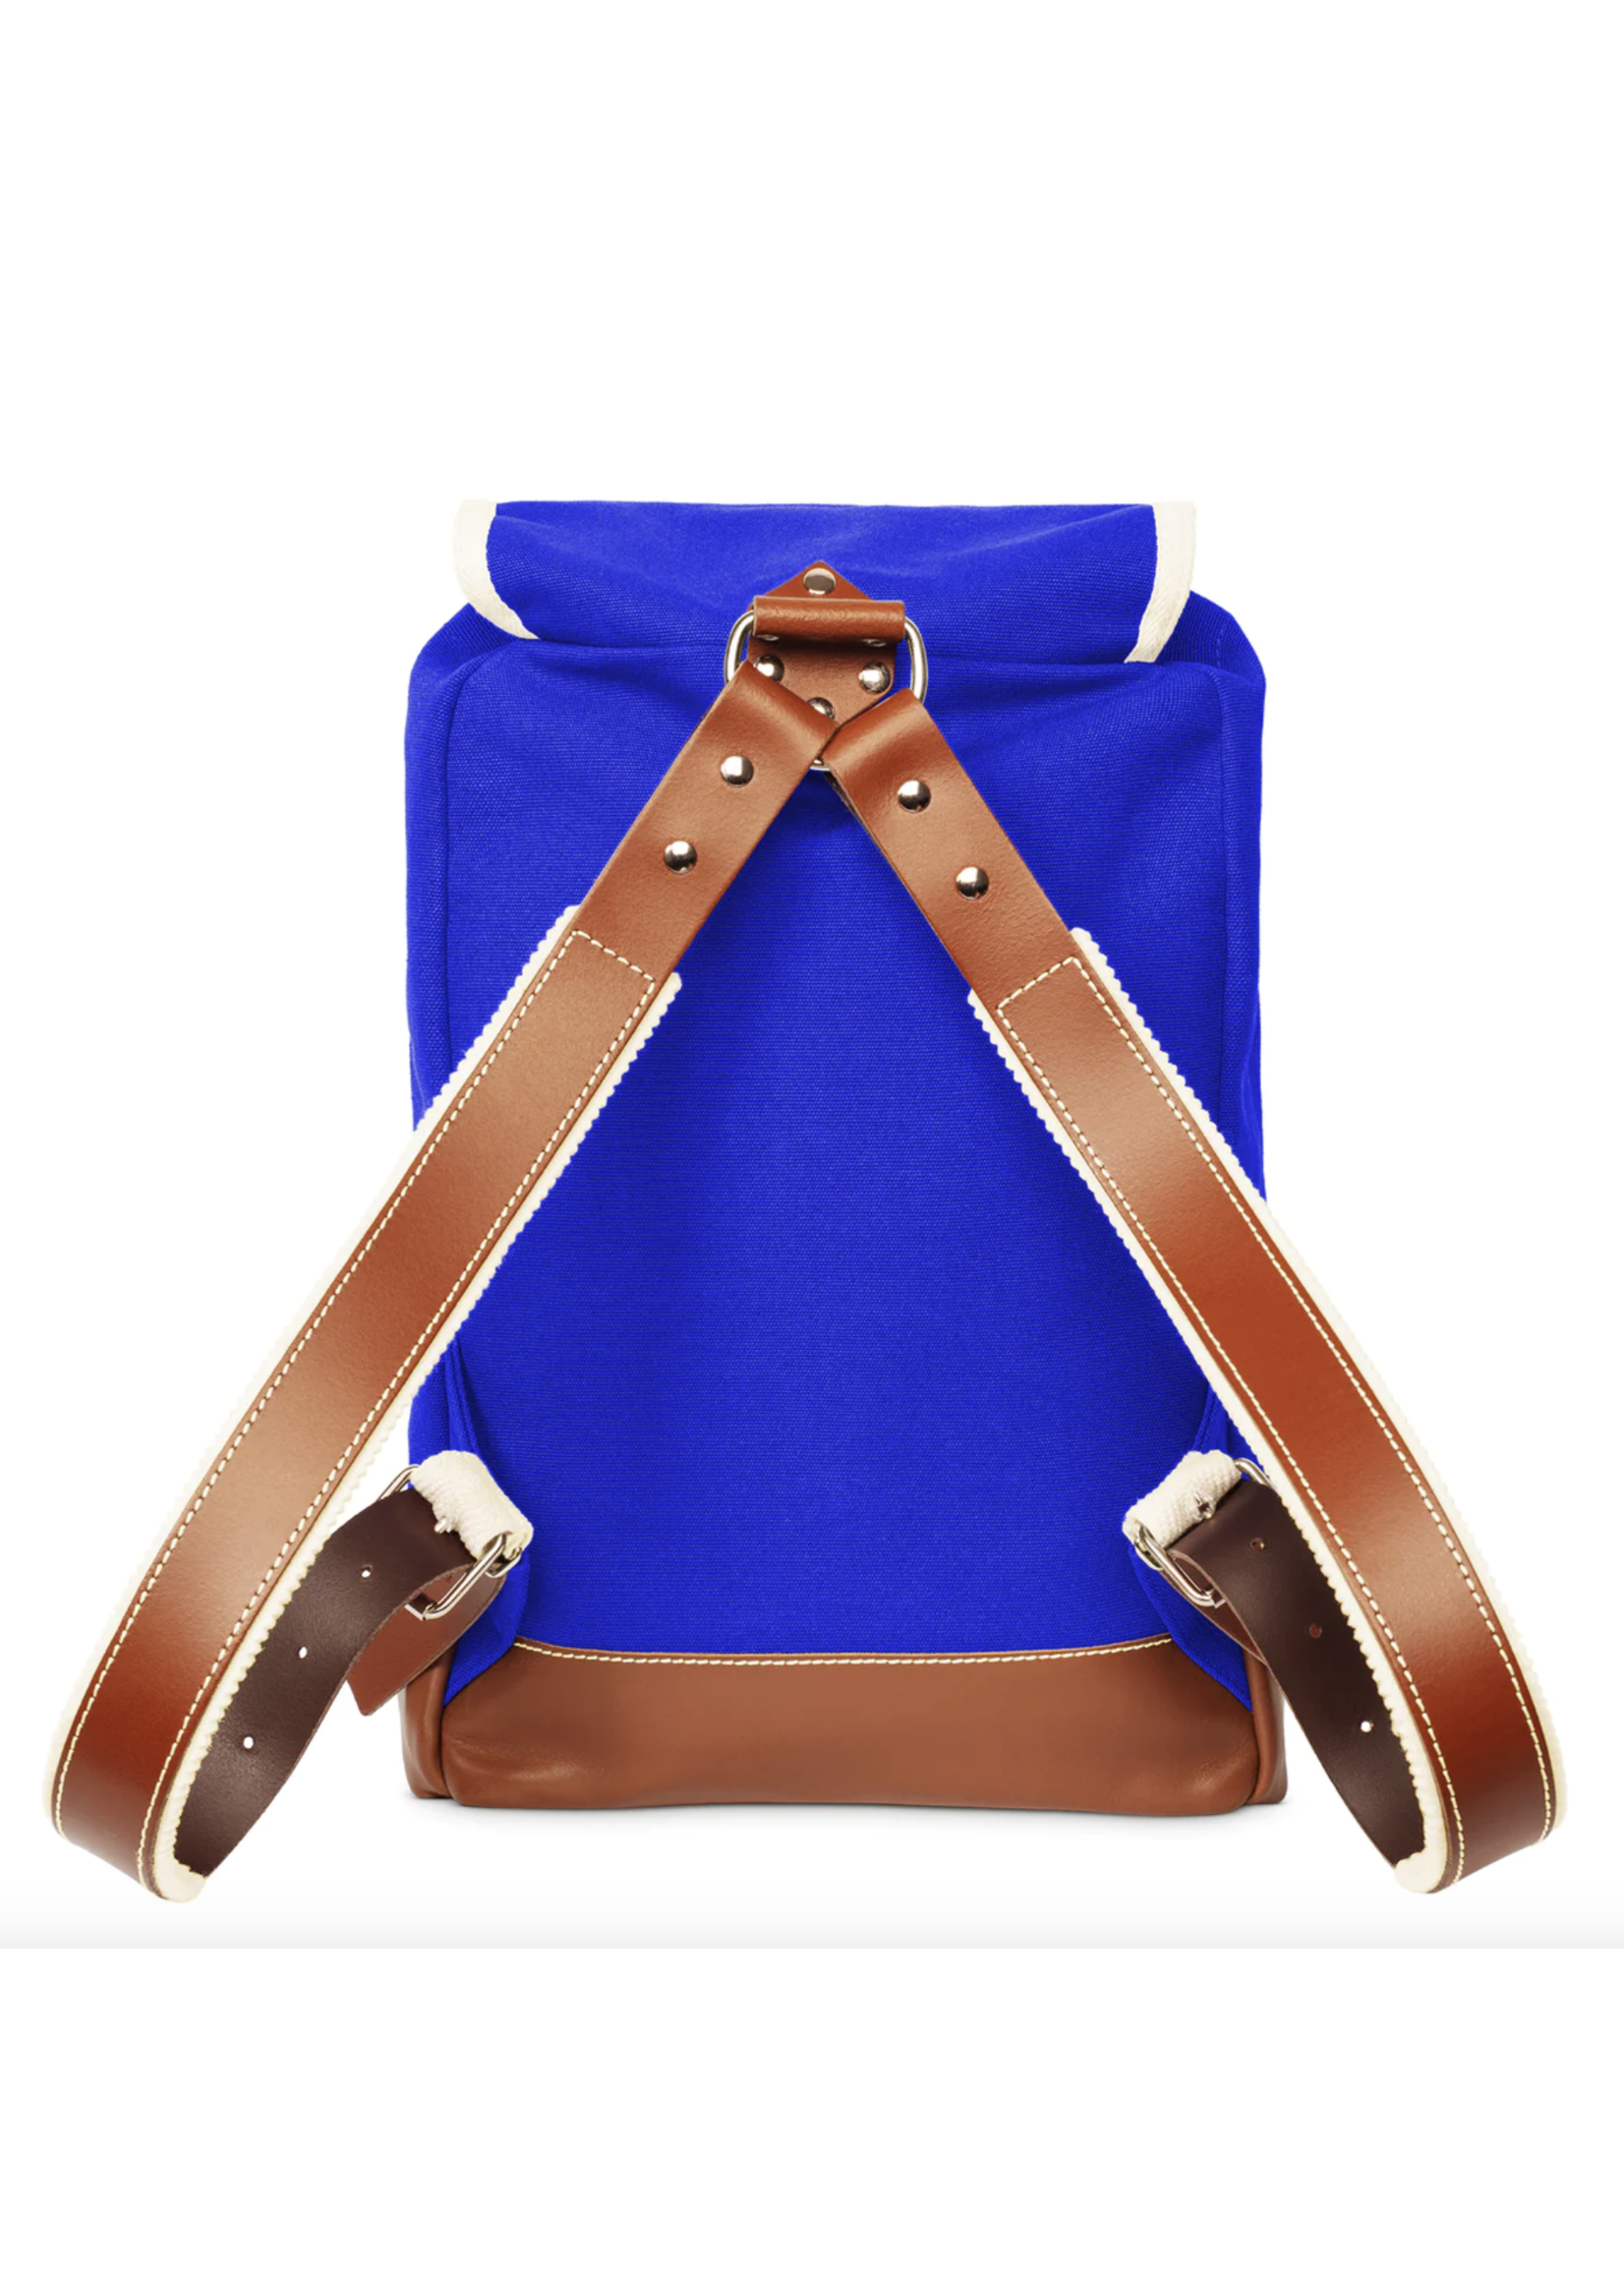 Ykra Matra - Mini Backpack - Blue